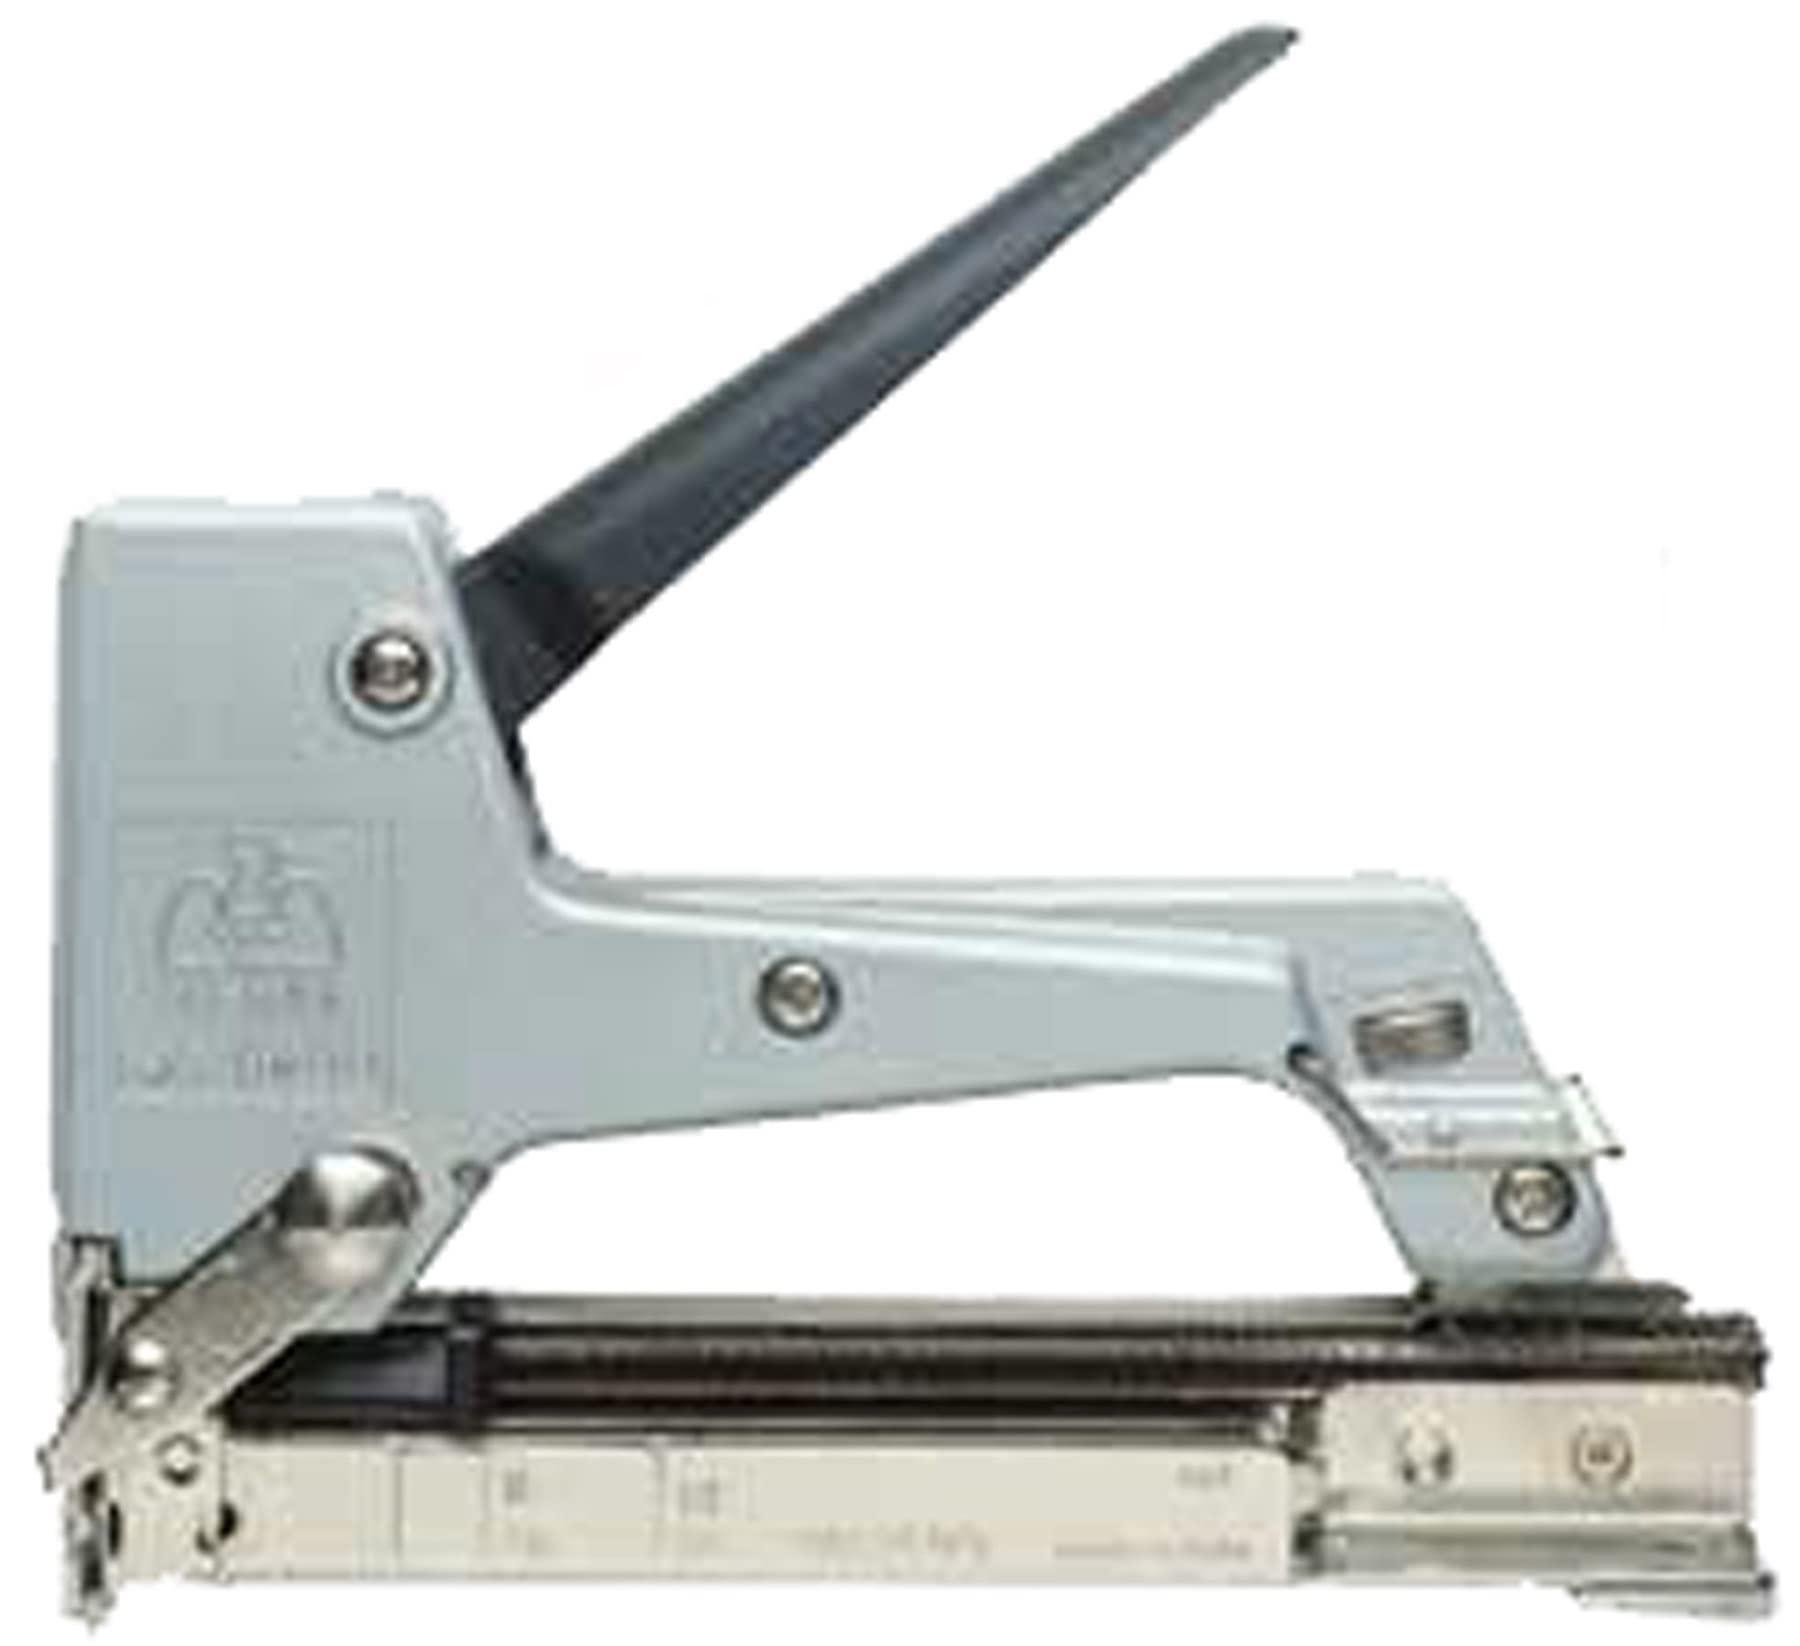 maestri rocama 16/34 manual stapler uses 5/16" crown 23 ga staples